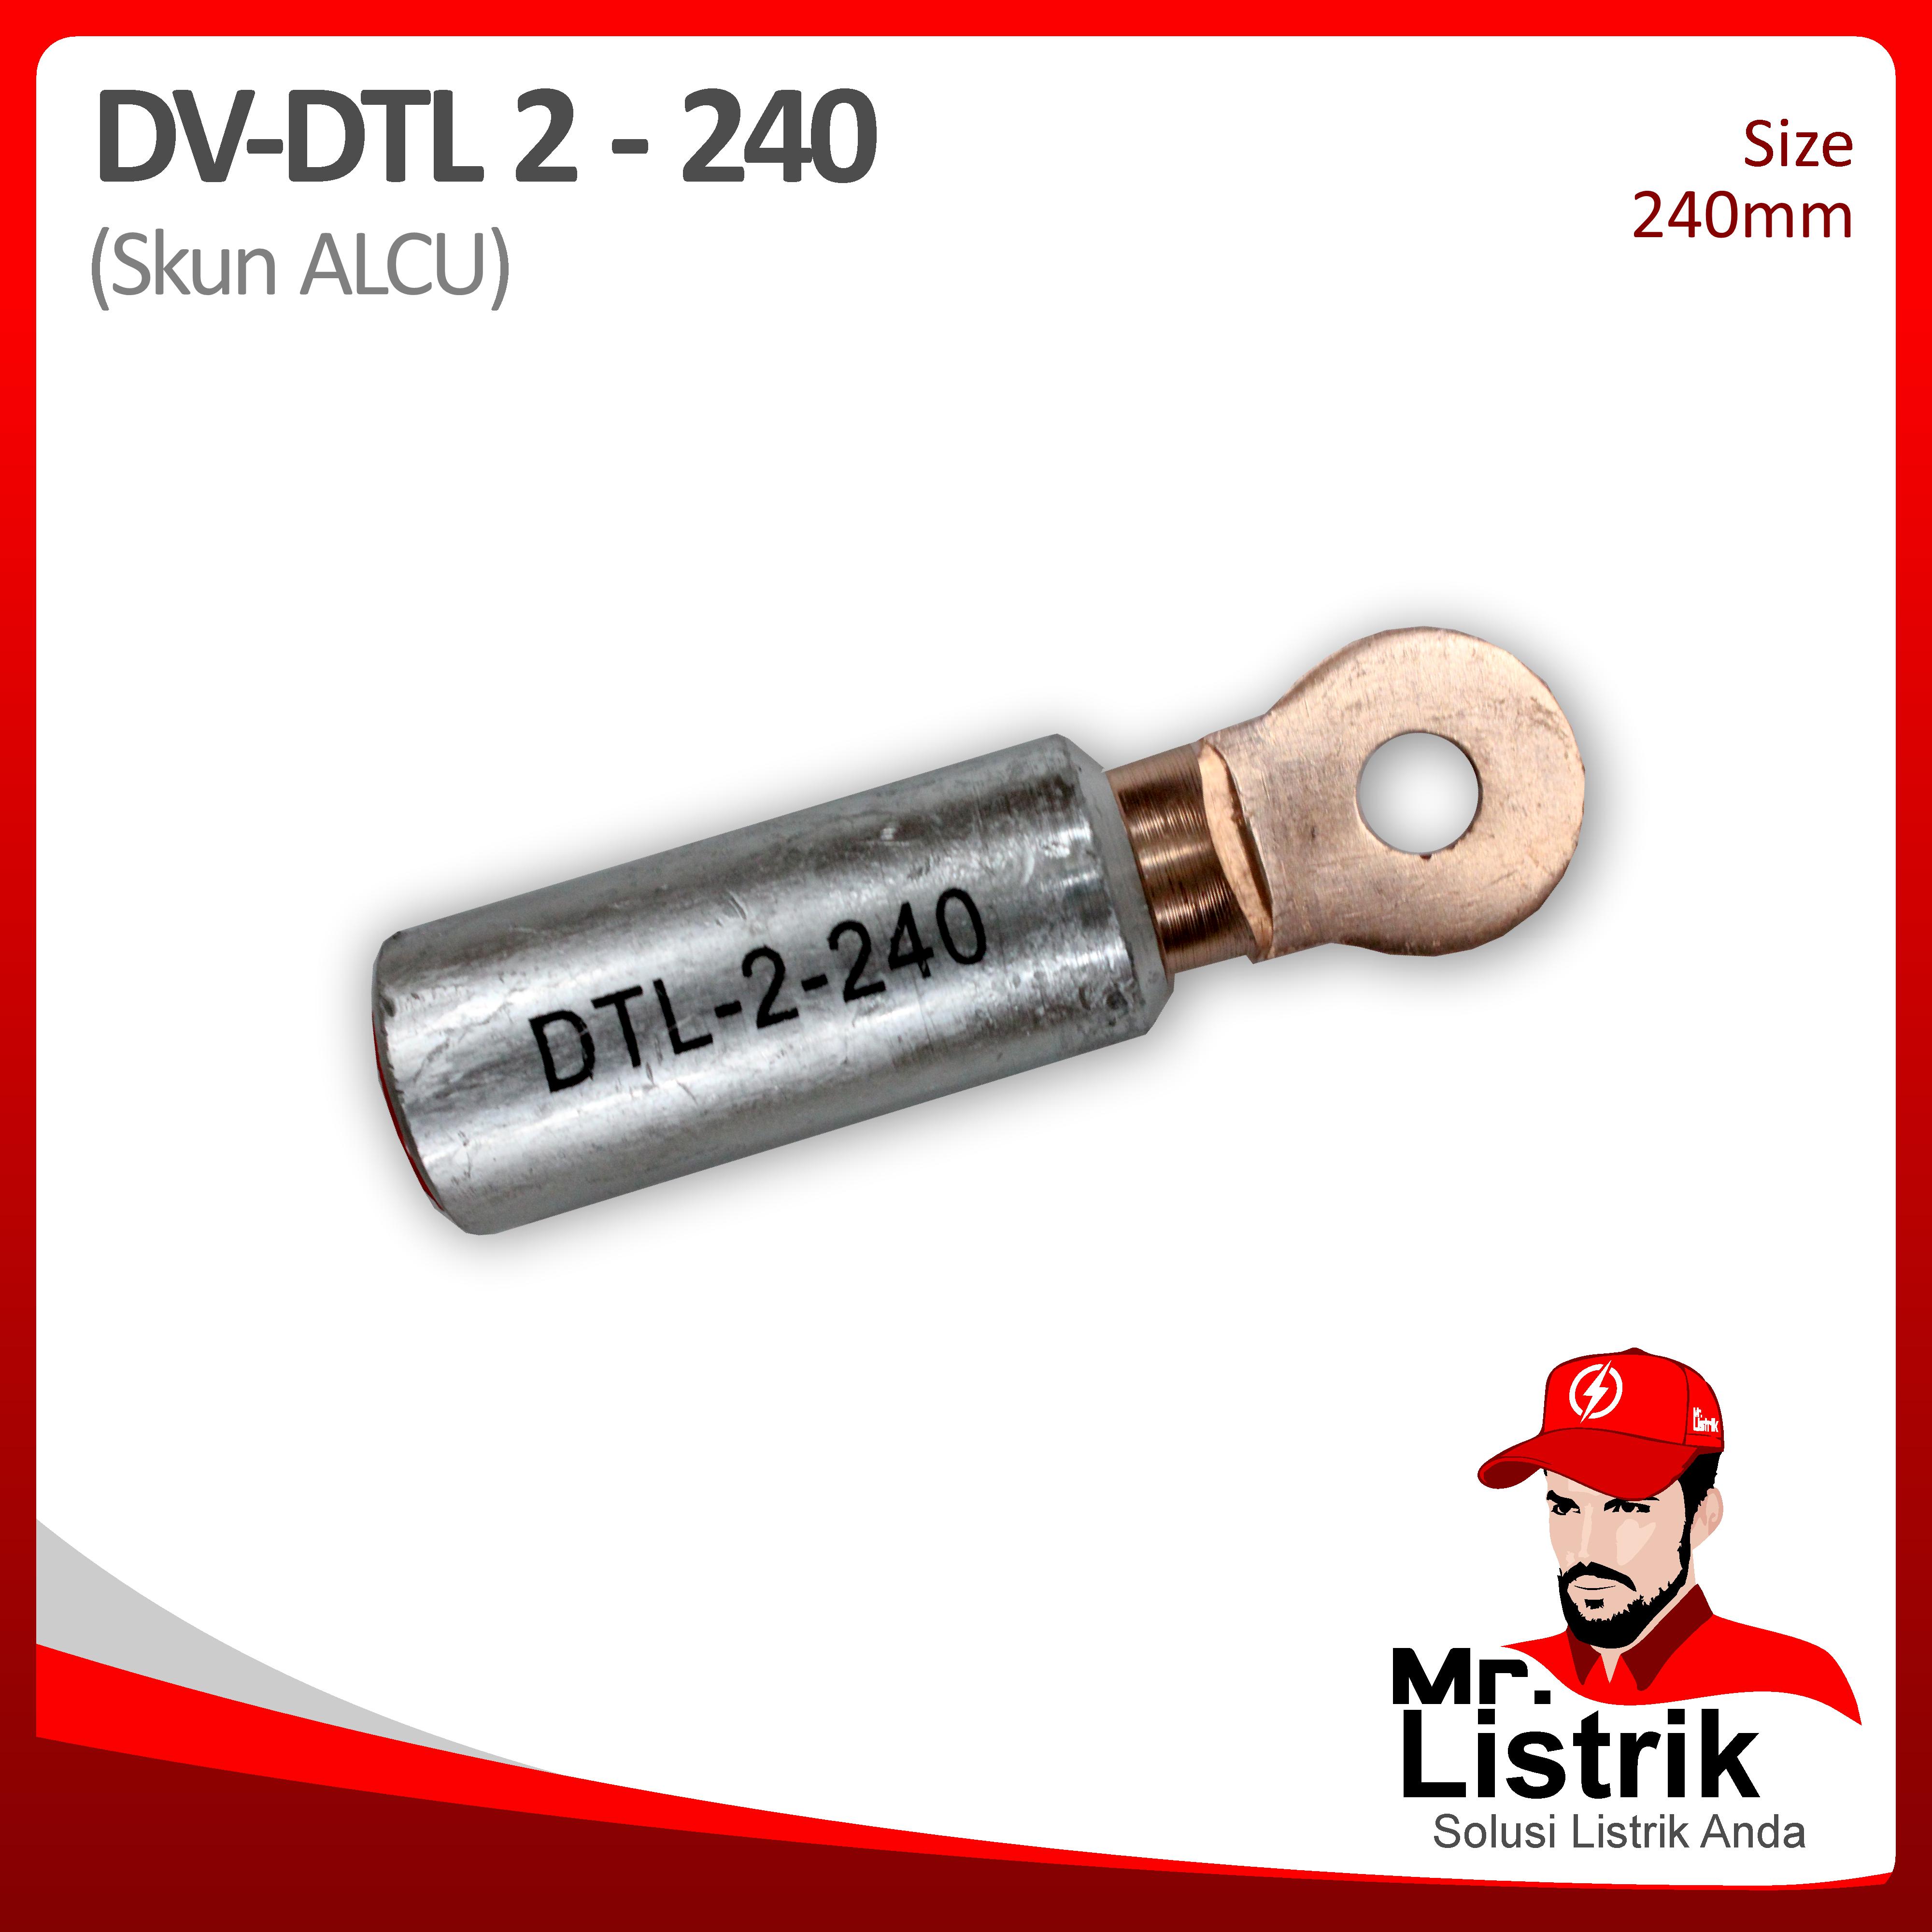 Skun ALCU 240mm DV DTL2-240